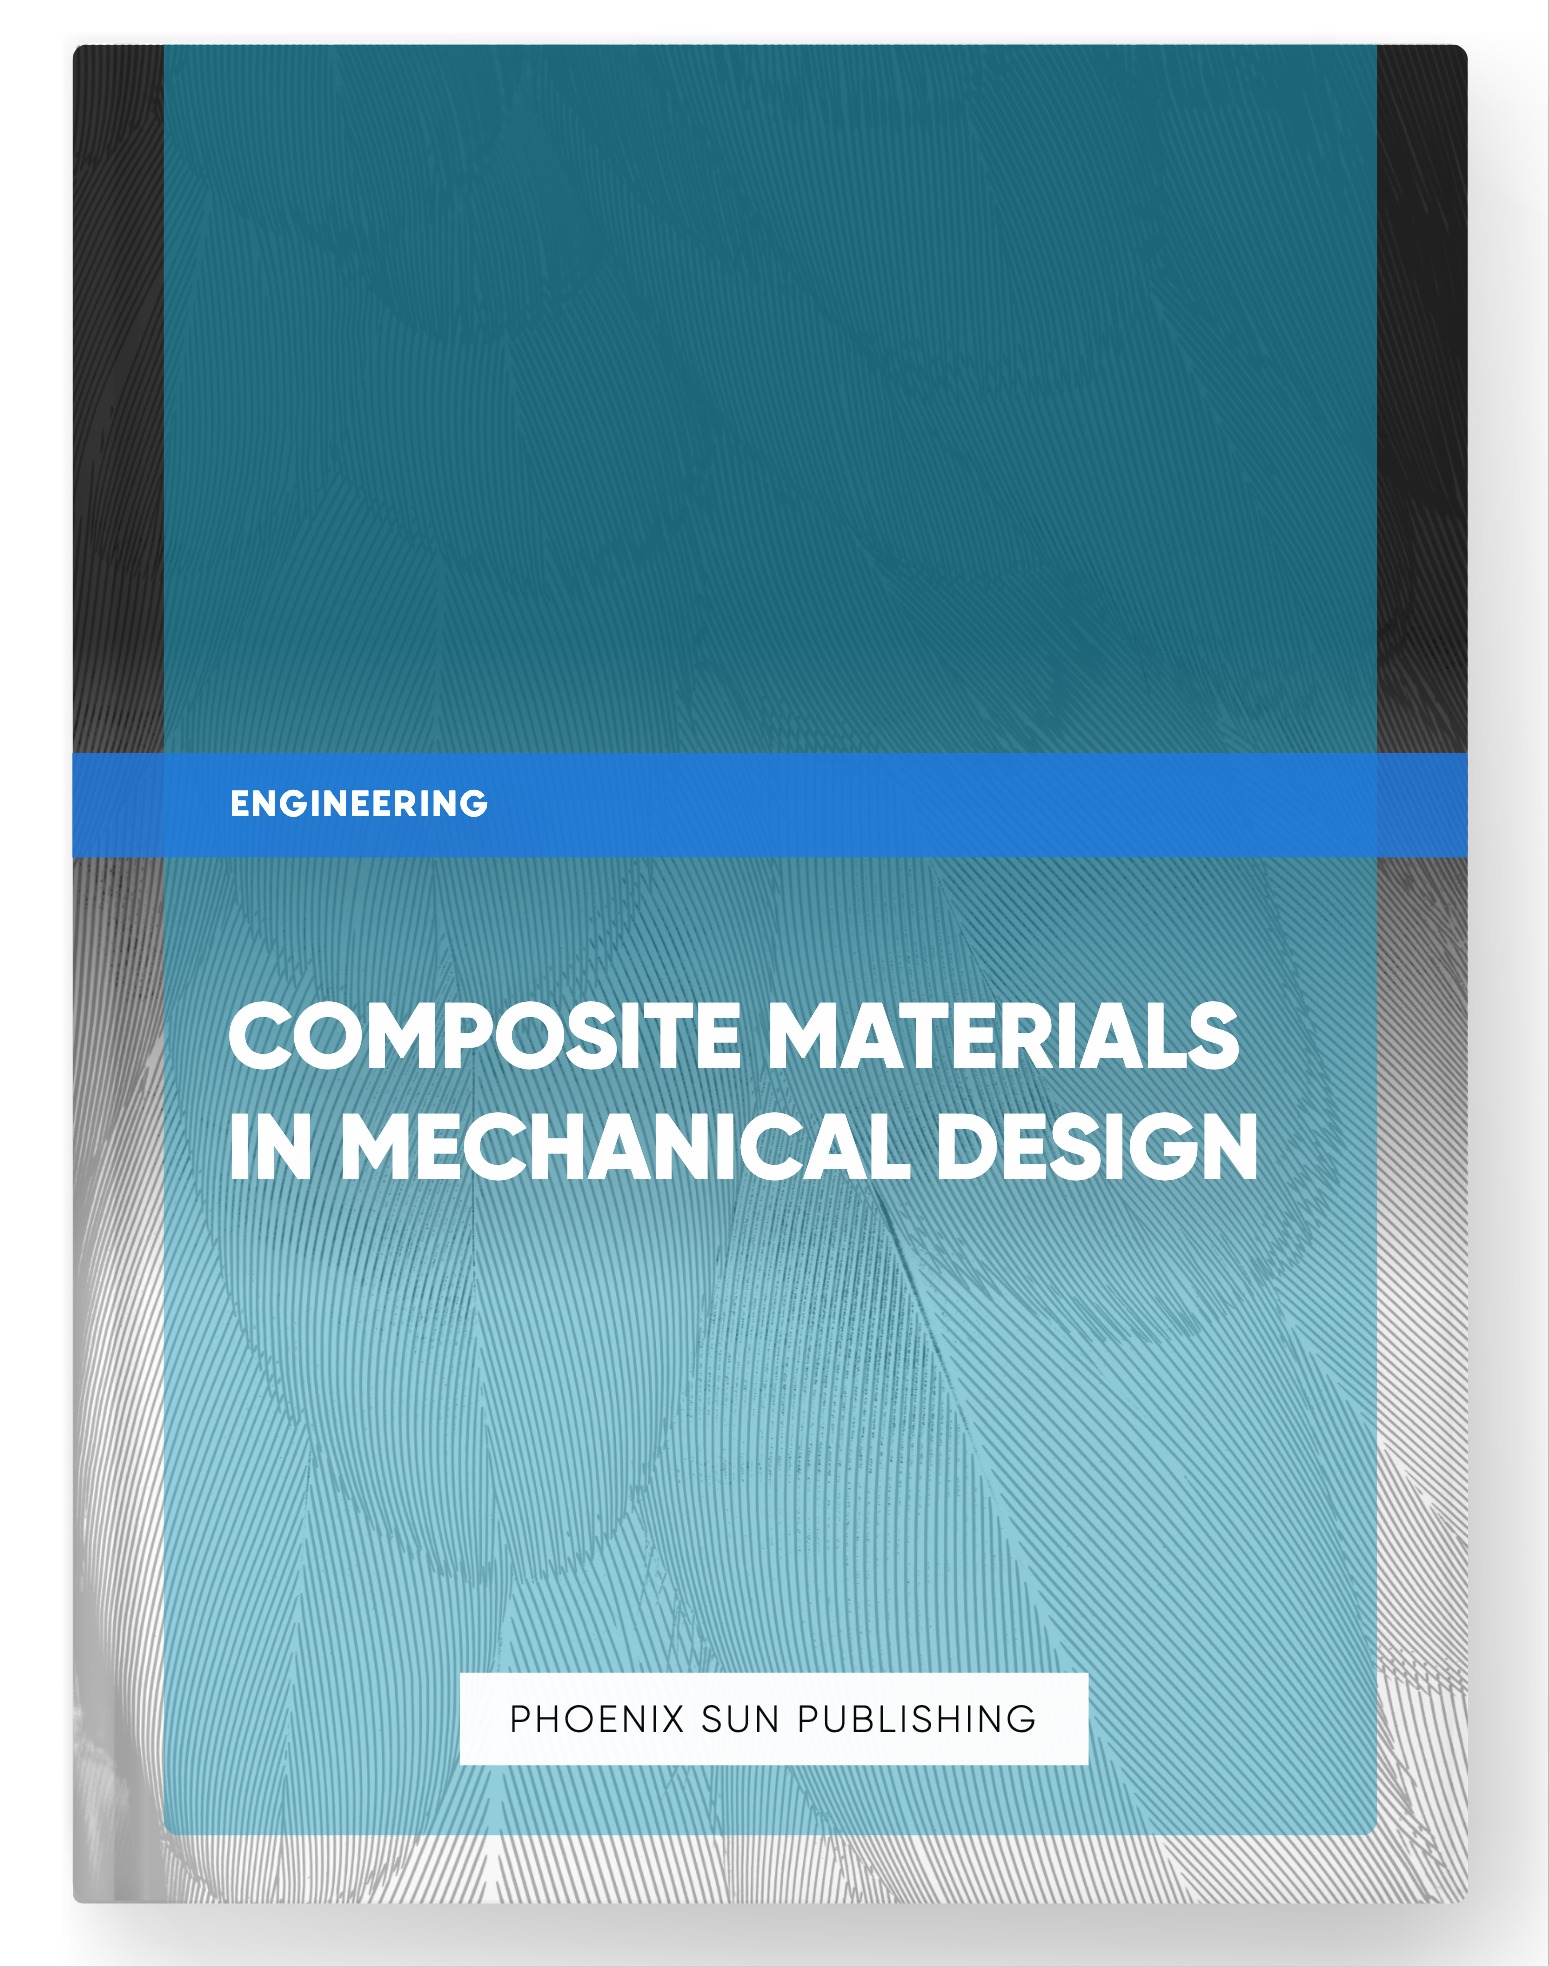 Composite Materials in Mechanical Design